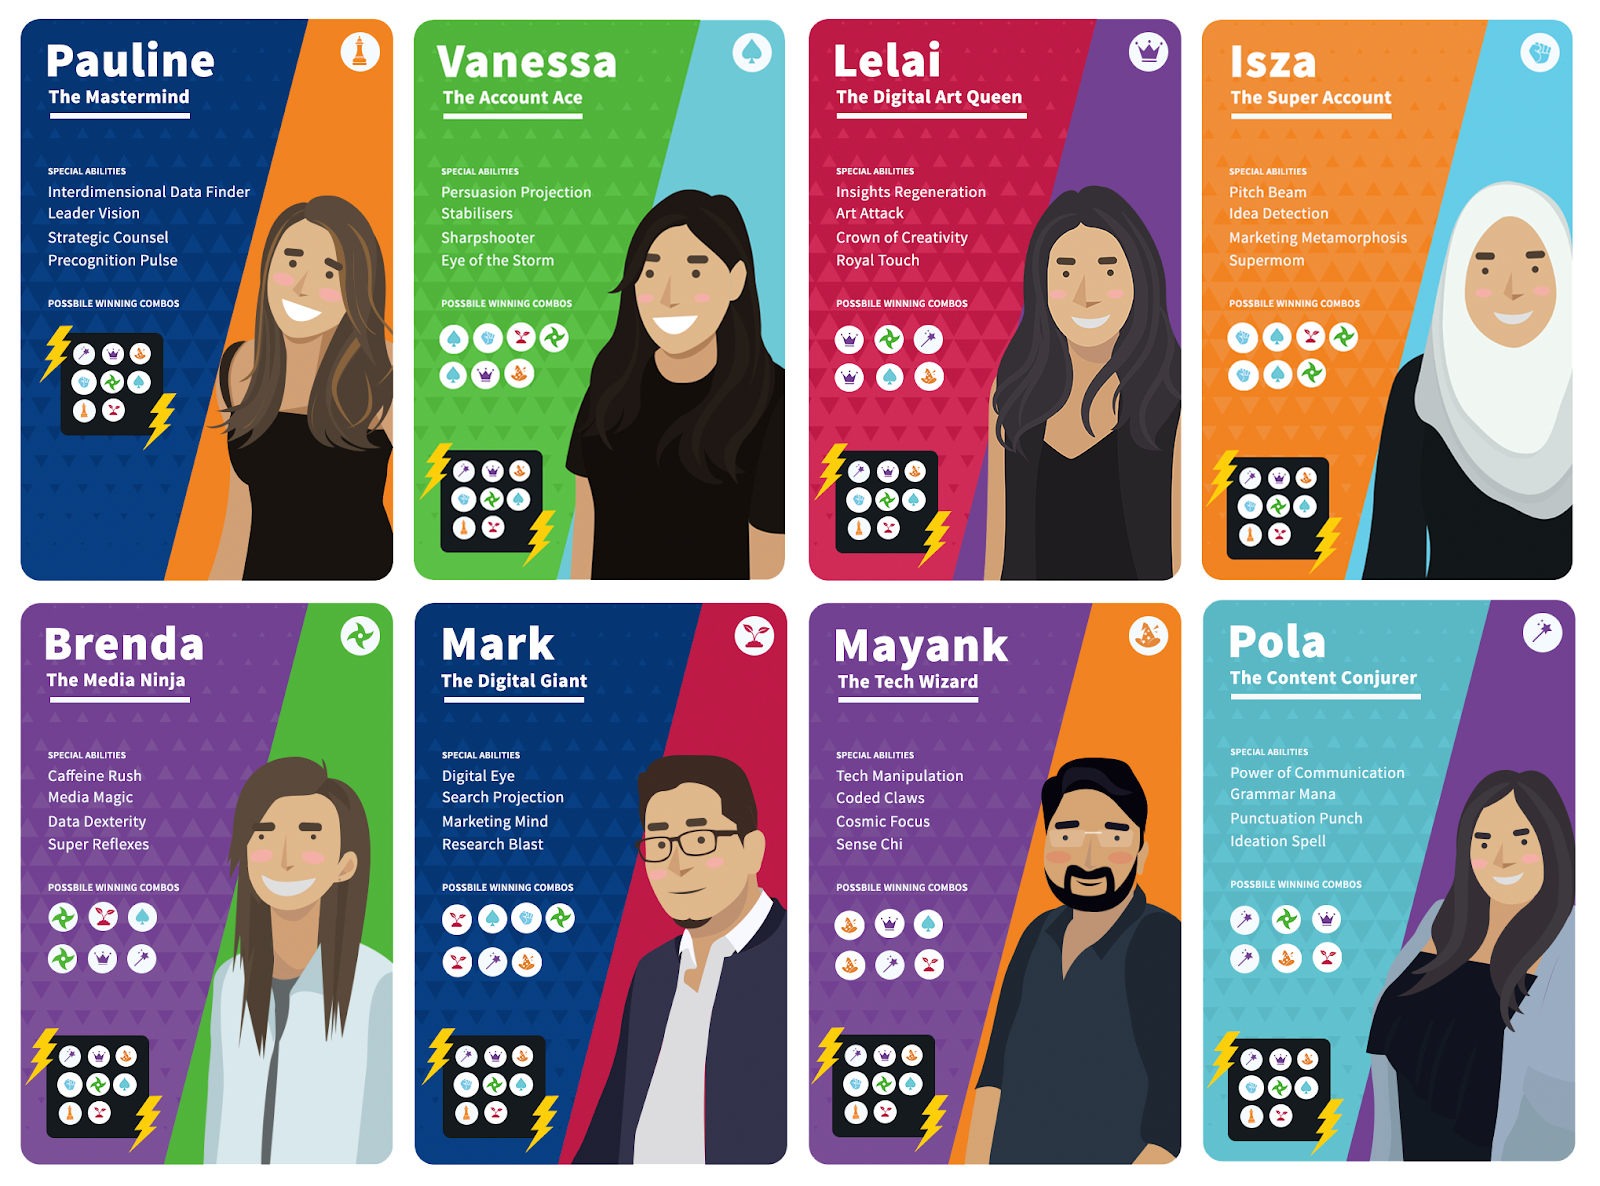 Flash cards featuring digital marketing agency teams